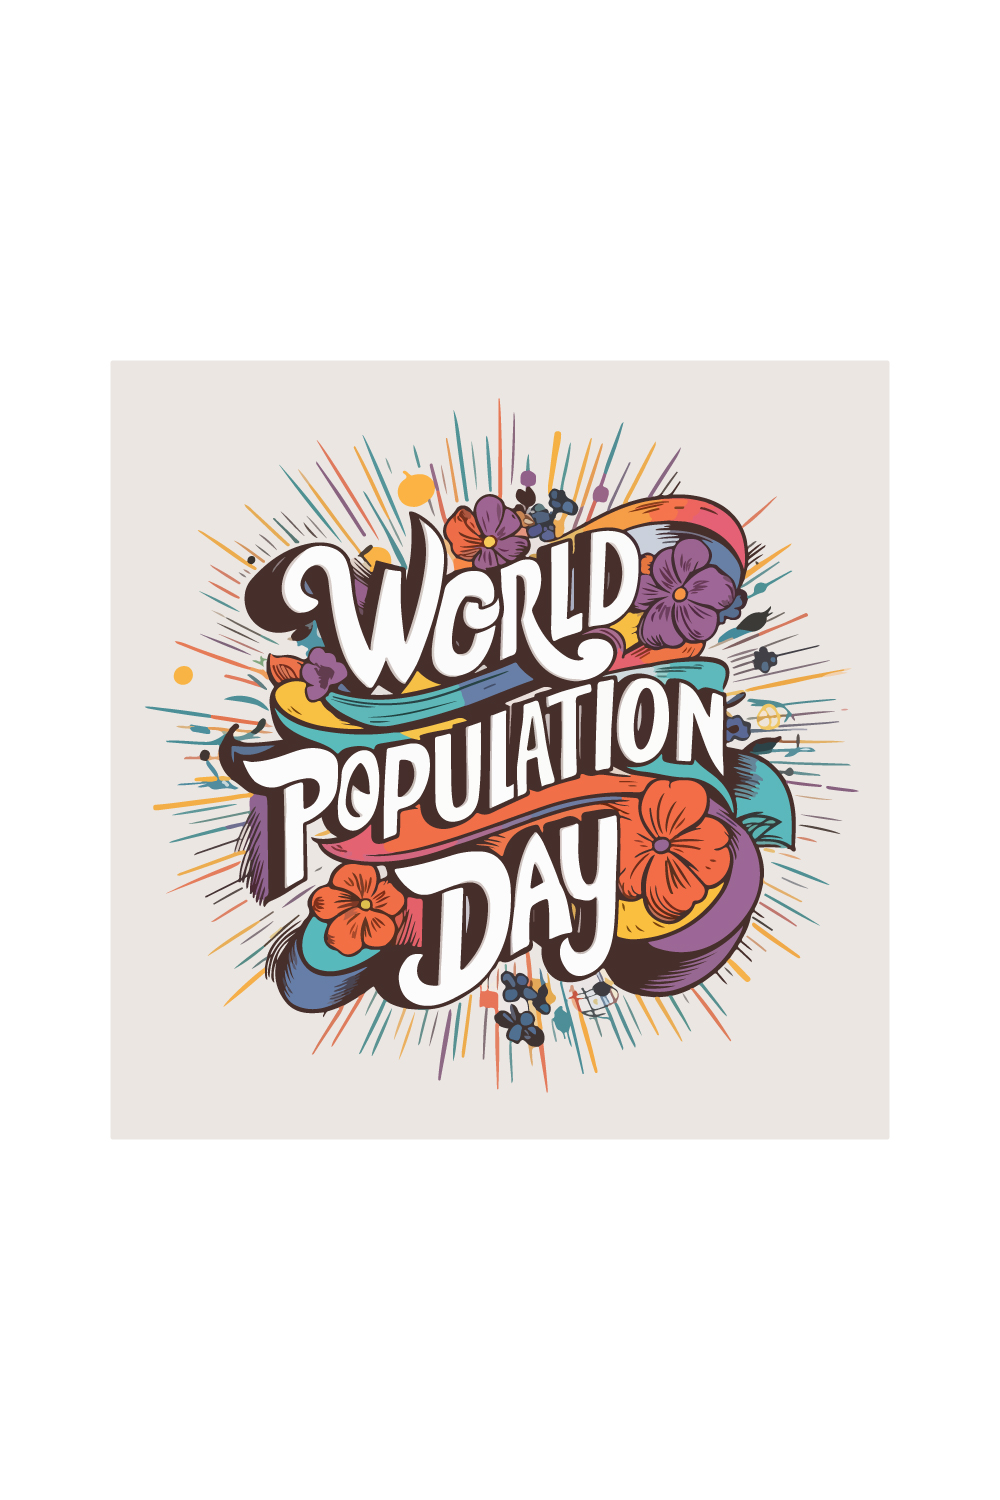 10 World Population Day Illustration pinterest preview image.